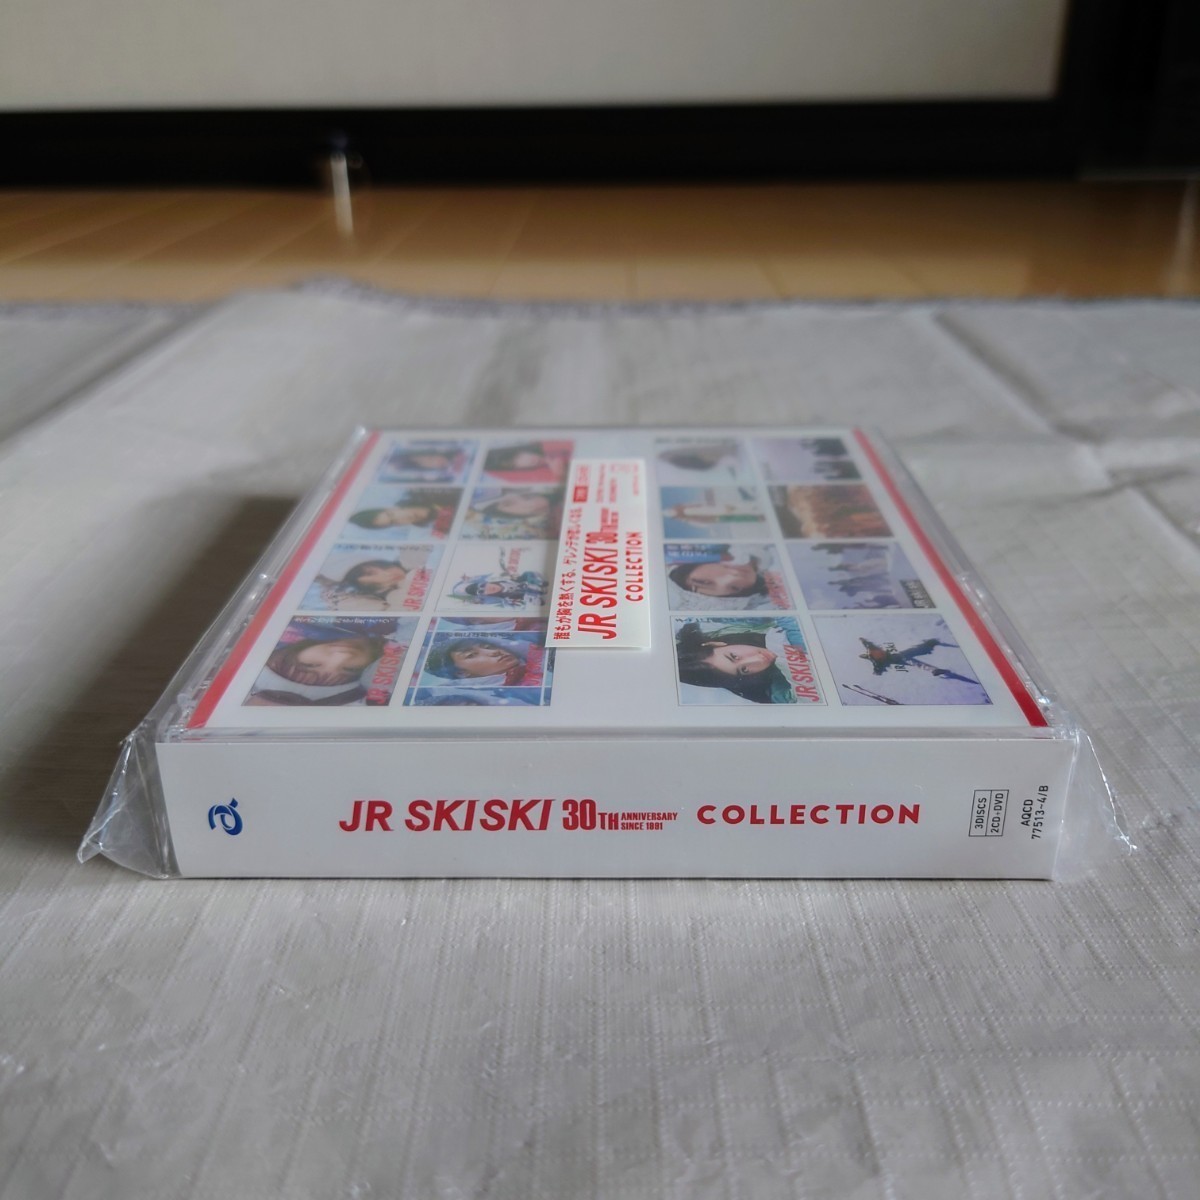 JR SKISKI 30th COLLECTION　2CD＋DVD　〜誰もが胸を熱くする、ゲレンデが恋しくなる〜　CD：全19曲　DVD：CM映像37本！ 【CD未使用】_画像5